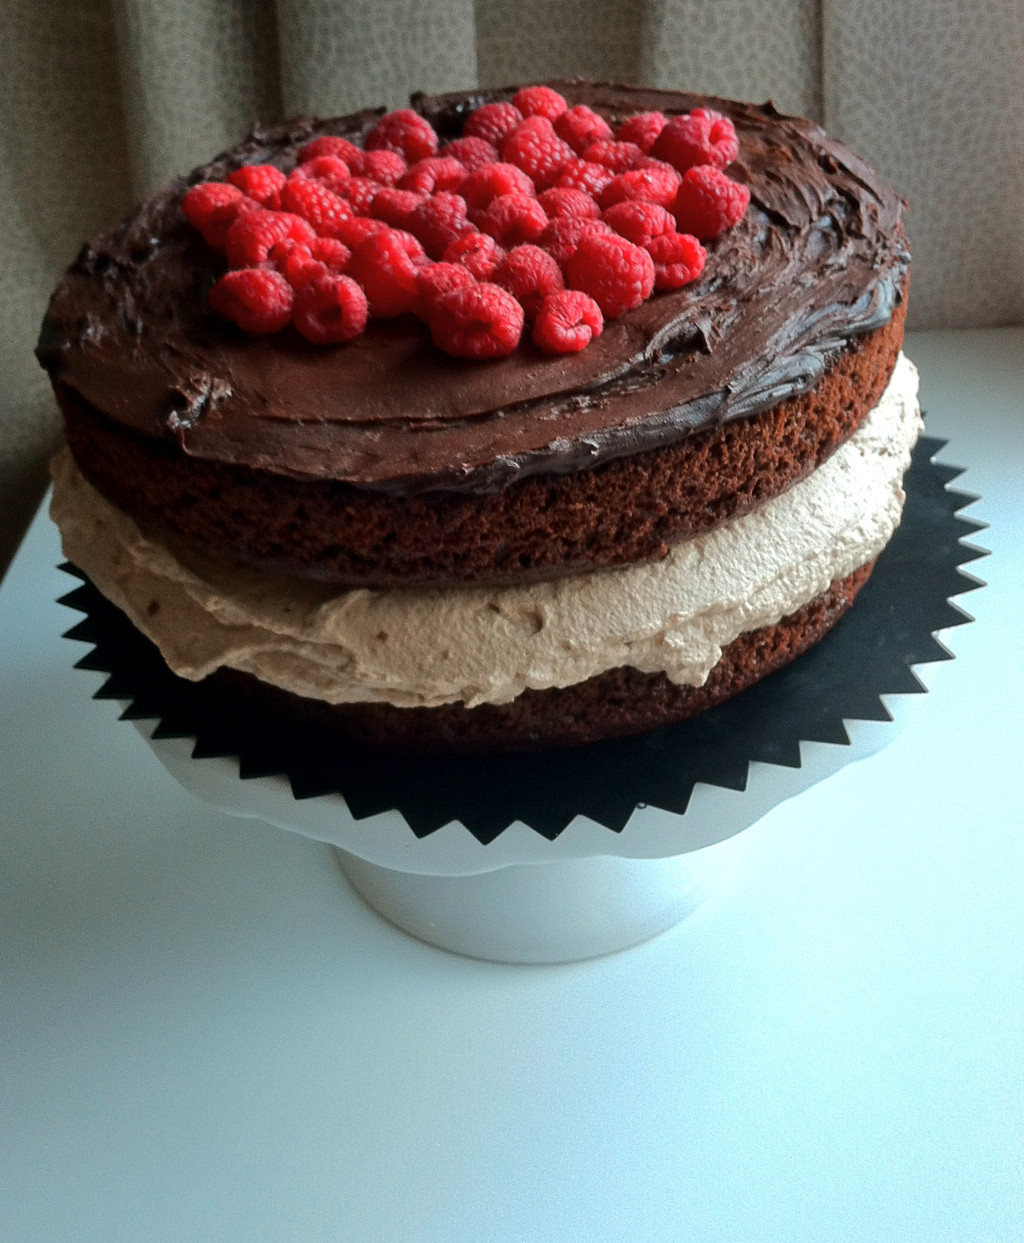 Raspberry Mousse Filling For Wedding Cake
 chocolate cake with raspberry mousse filling